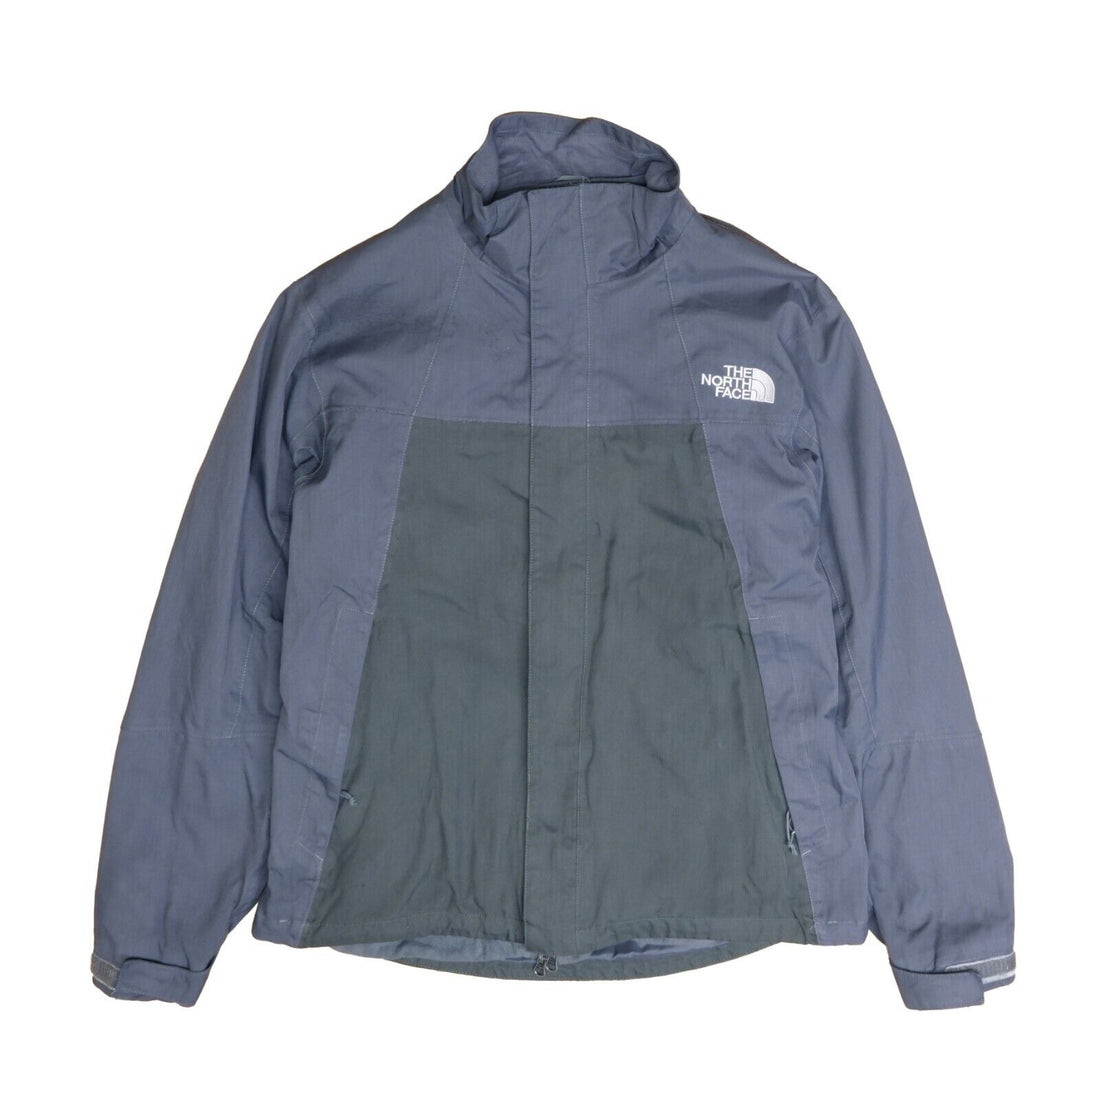 Vintage North Face Steep Tech Pullover Jacket Size M Blue Gray Black Ski